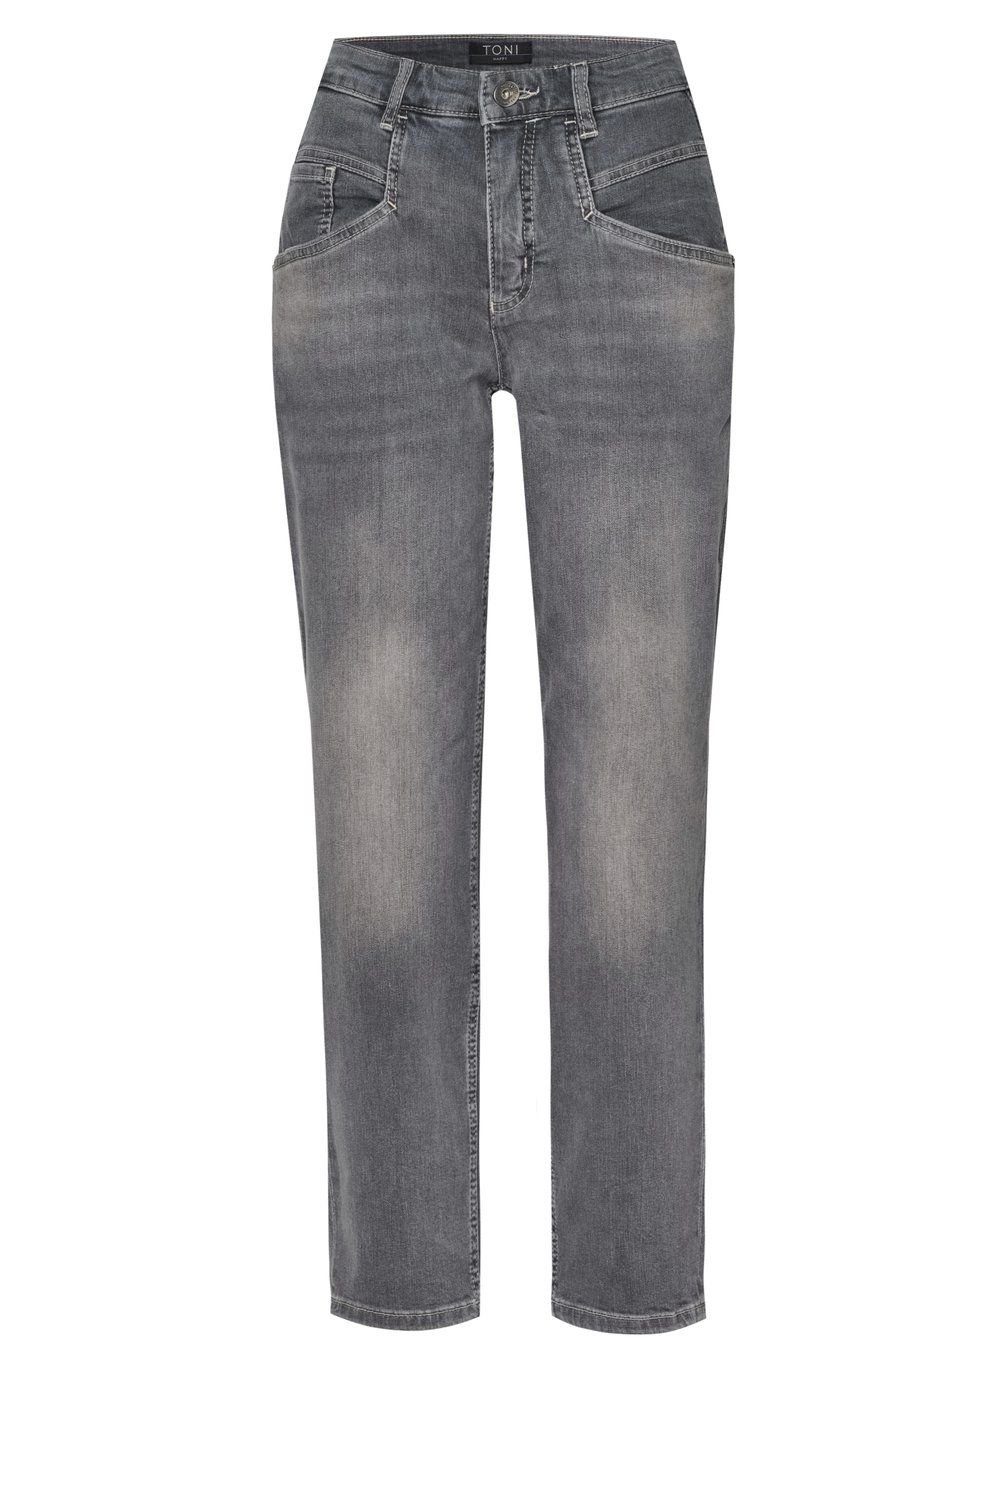 TONI 5-Pocket-Jeans HAPPY grey used